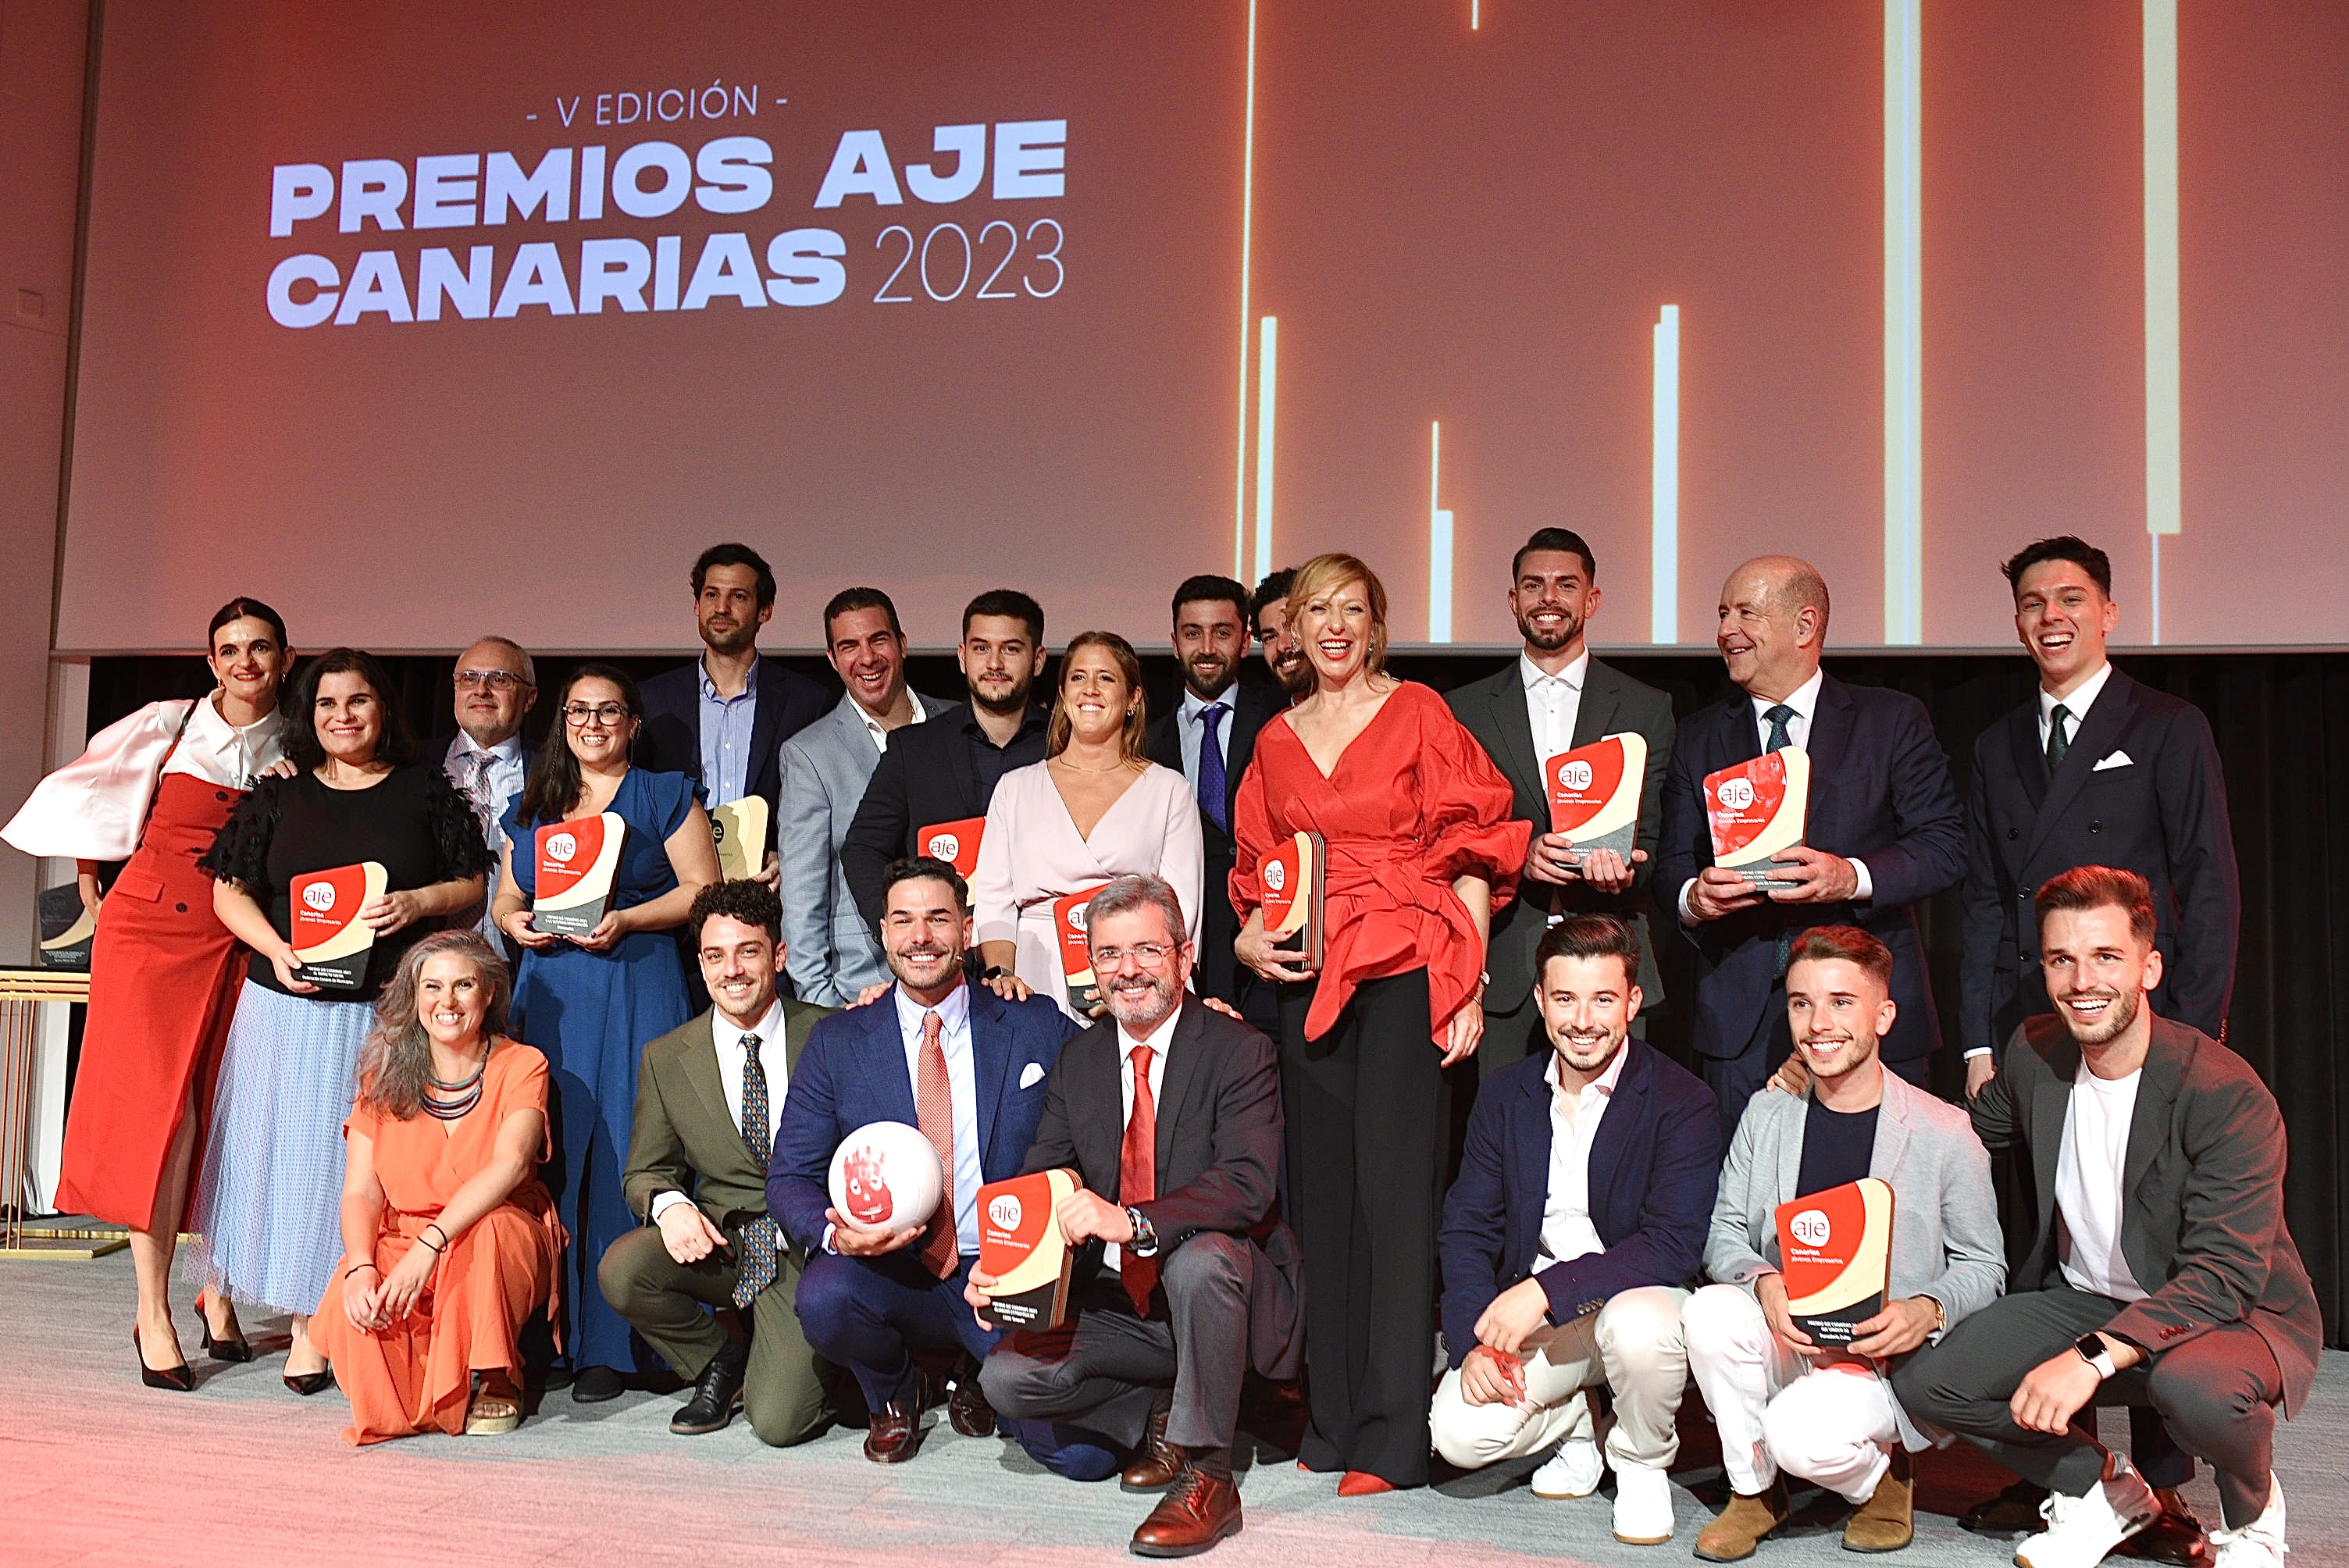 Premios AJE Canarias / CanariasNoticias.es 